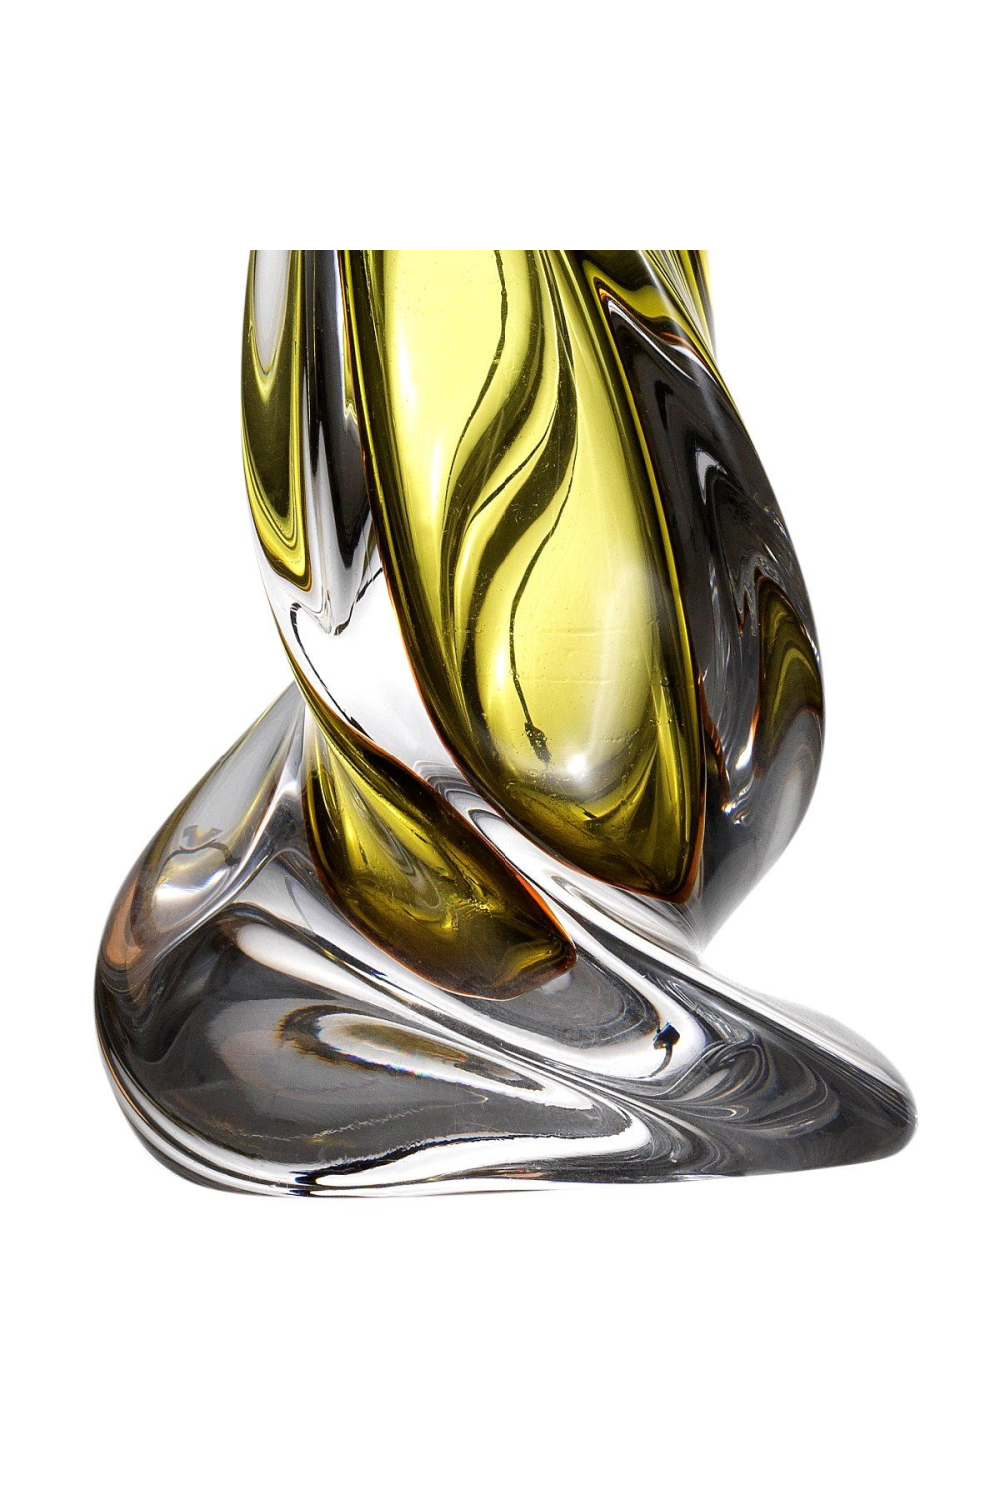 Green Blown Glass Table Lamp | Eichholtz Carnegie | OROA